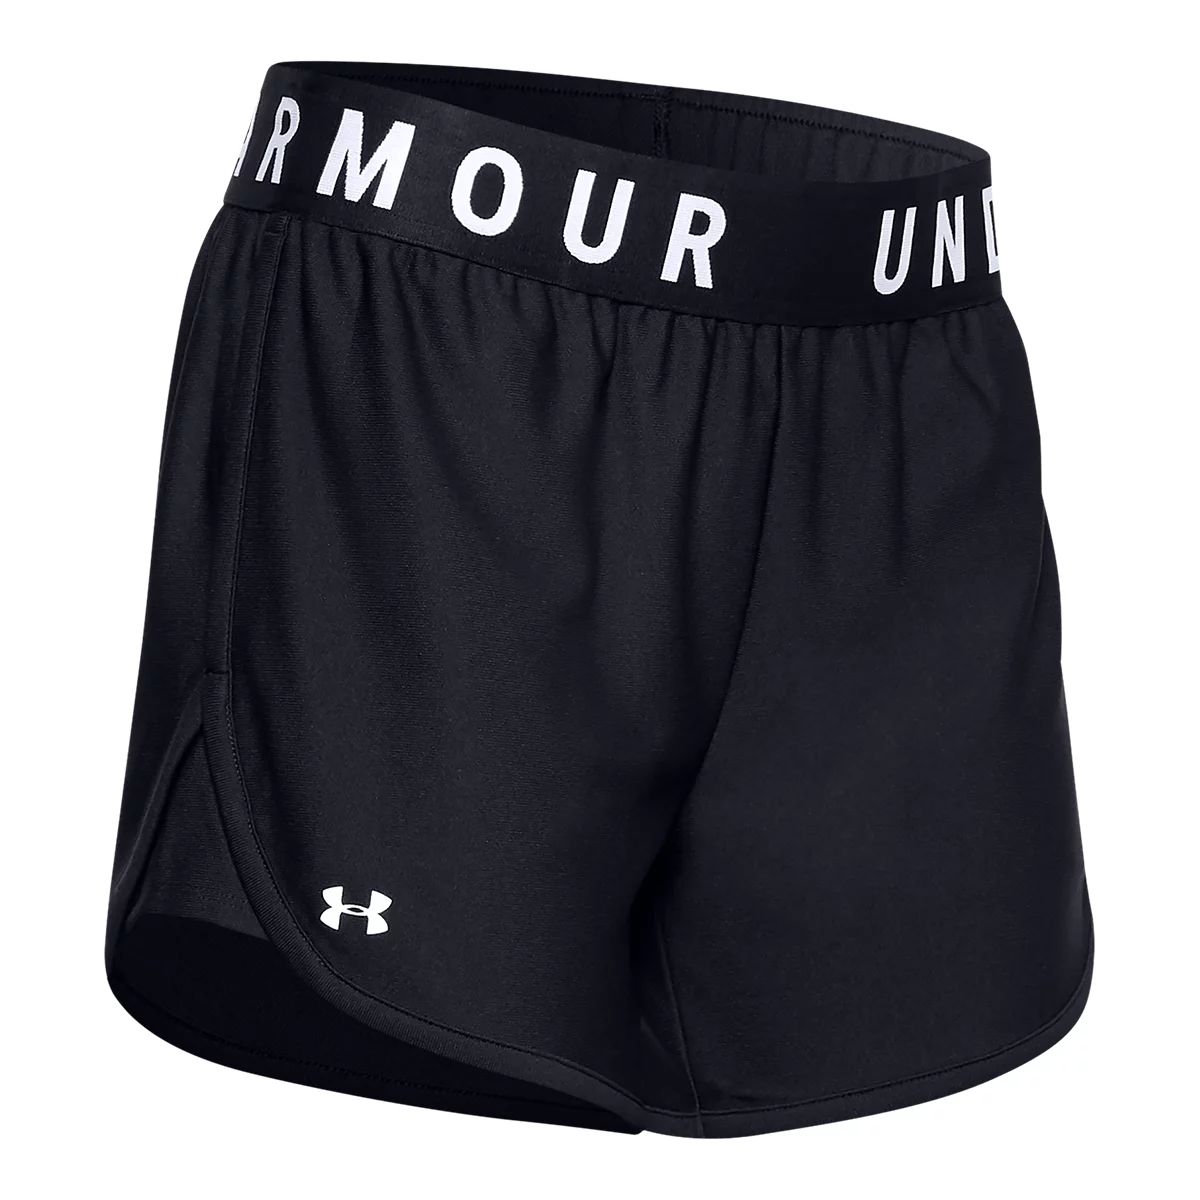 Under Armour Women's Flex Woven BTG 5 Inch Shorts